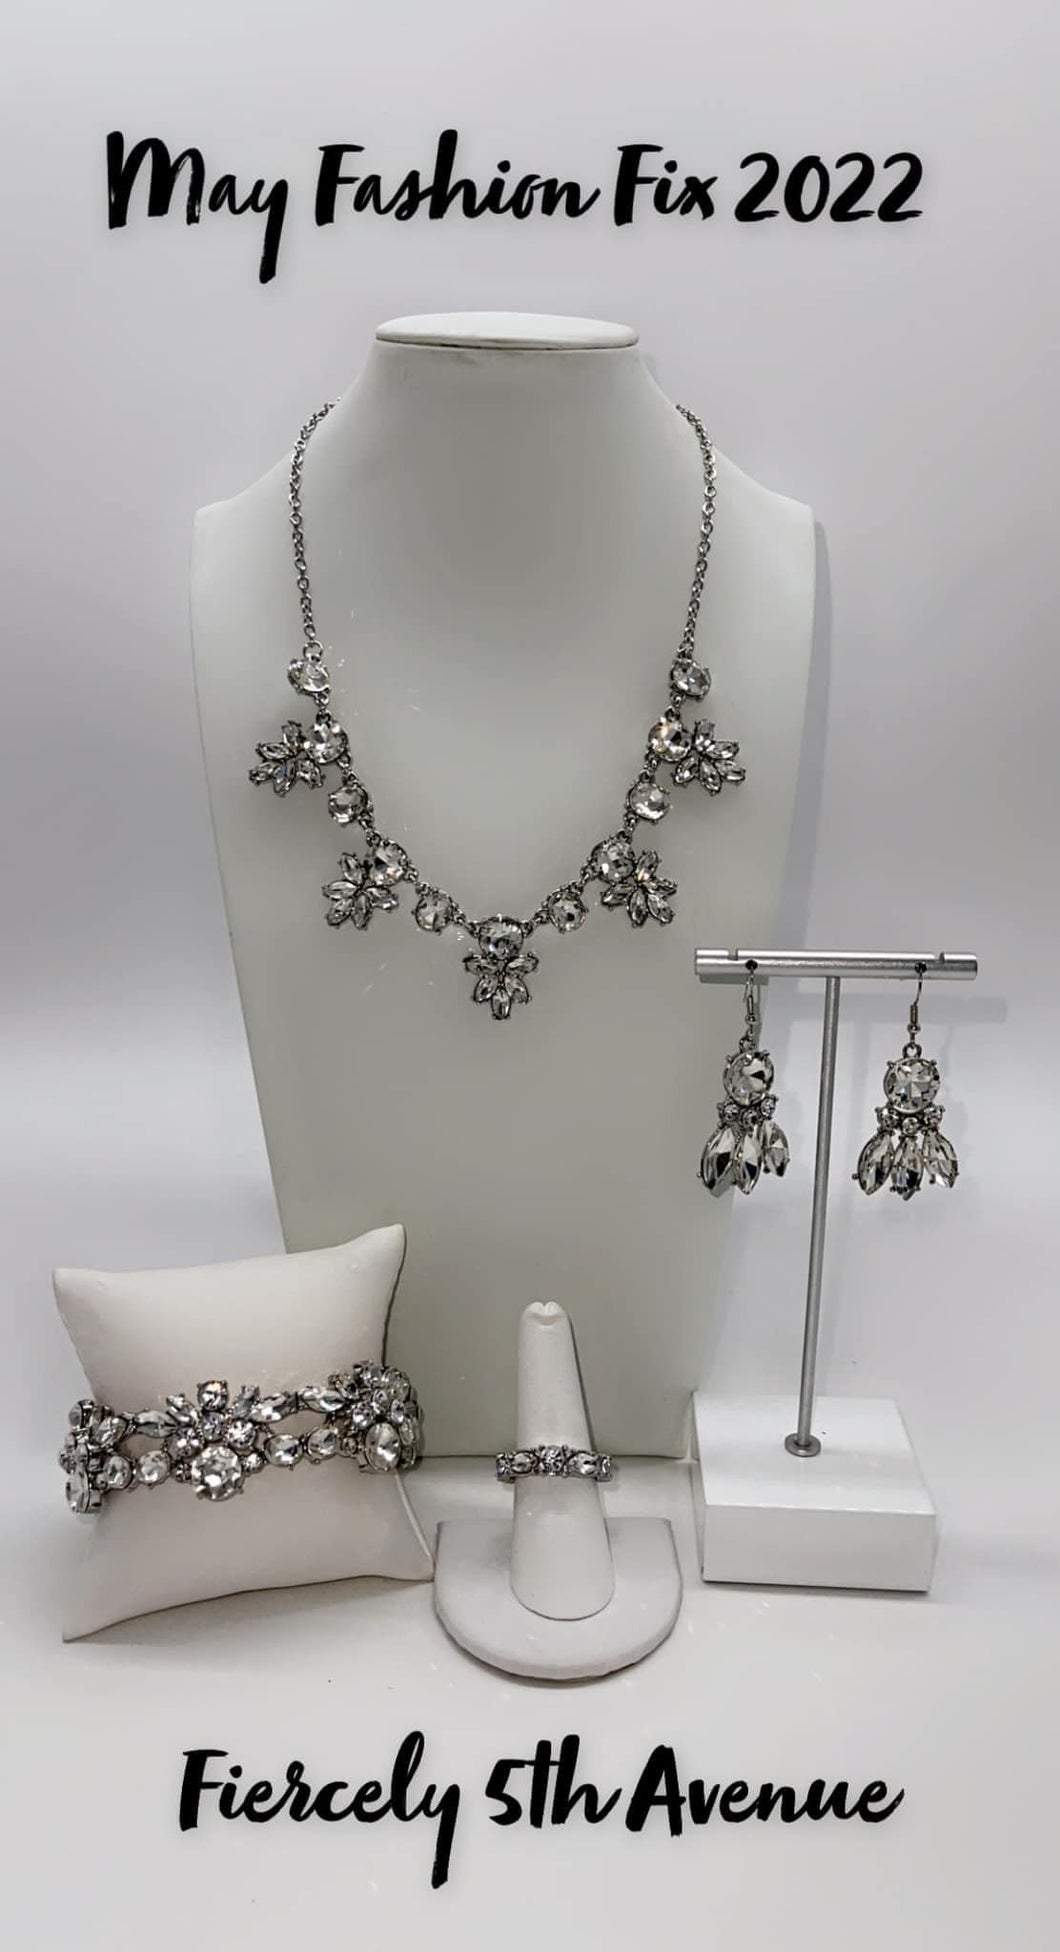 Fiercely 5th Avenue - Fashion Fix Set - May 2022 - Dare2bdazzlin N Jewelry